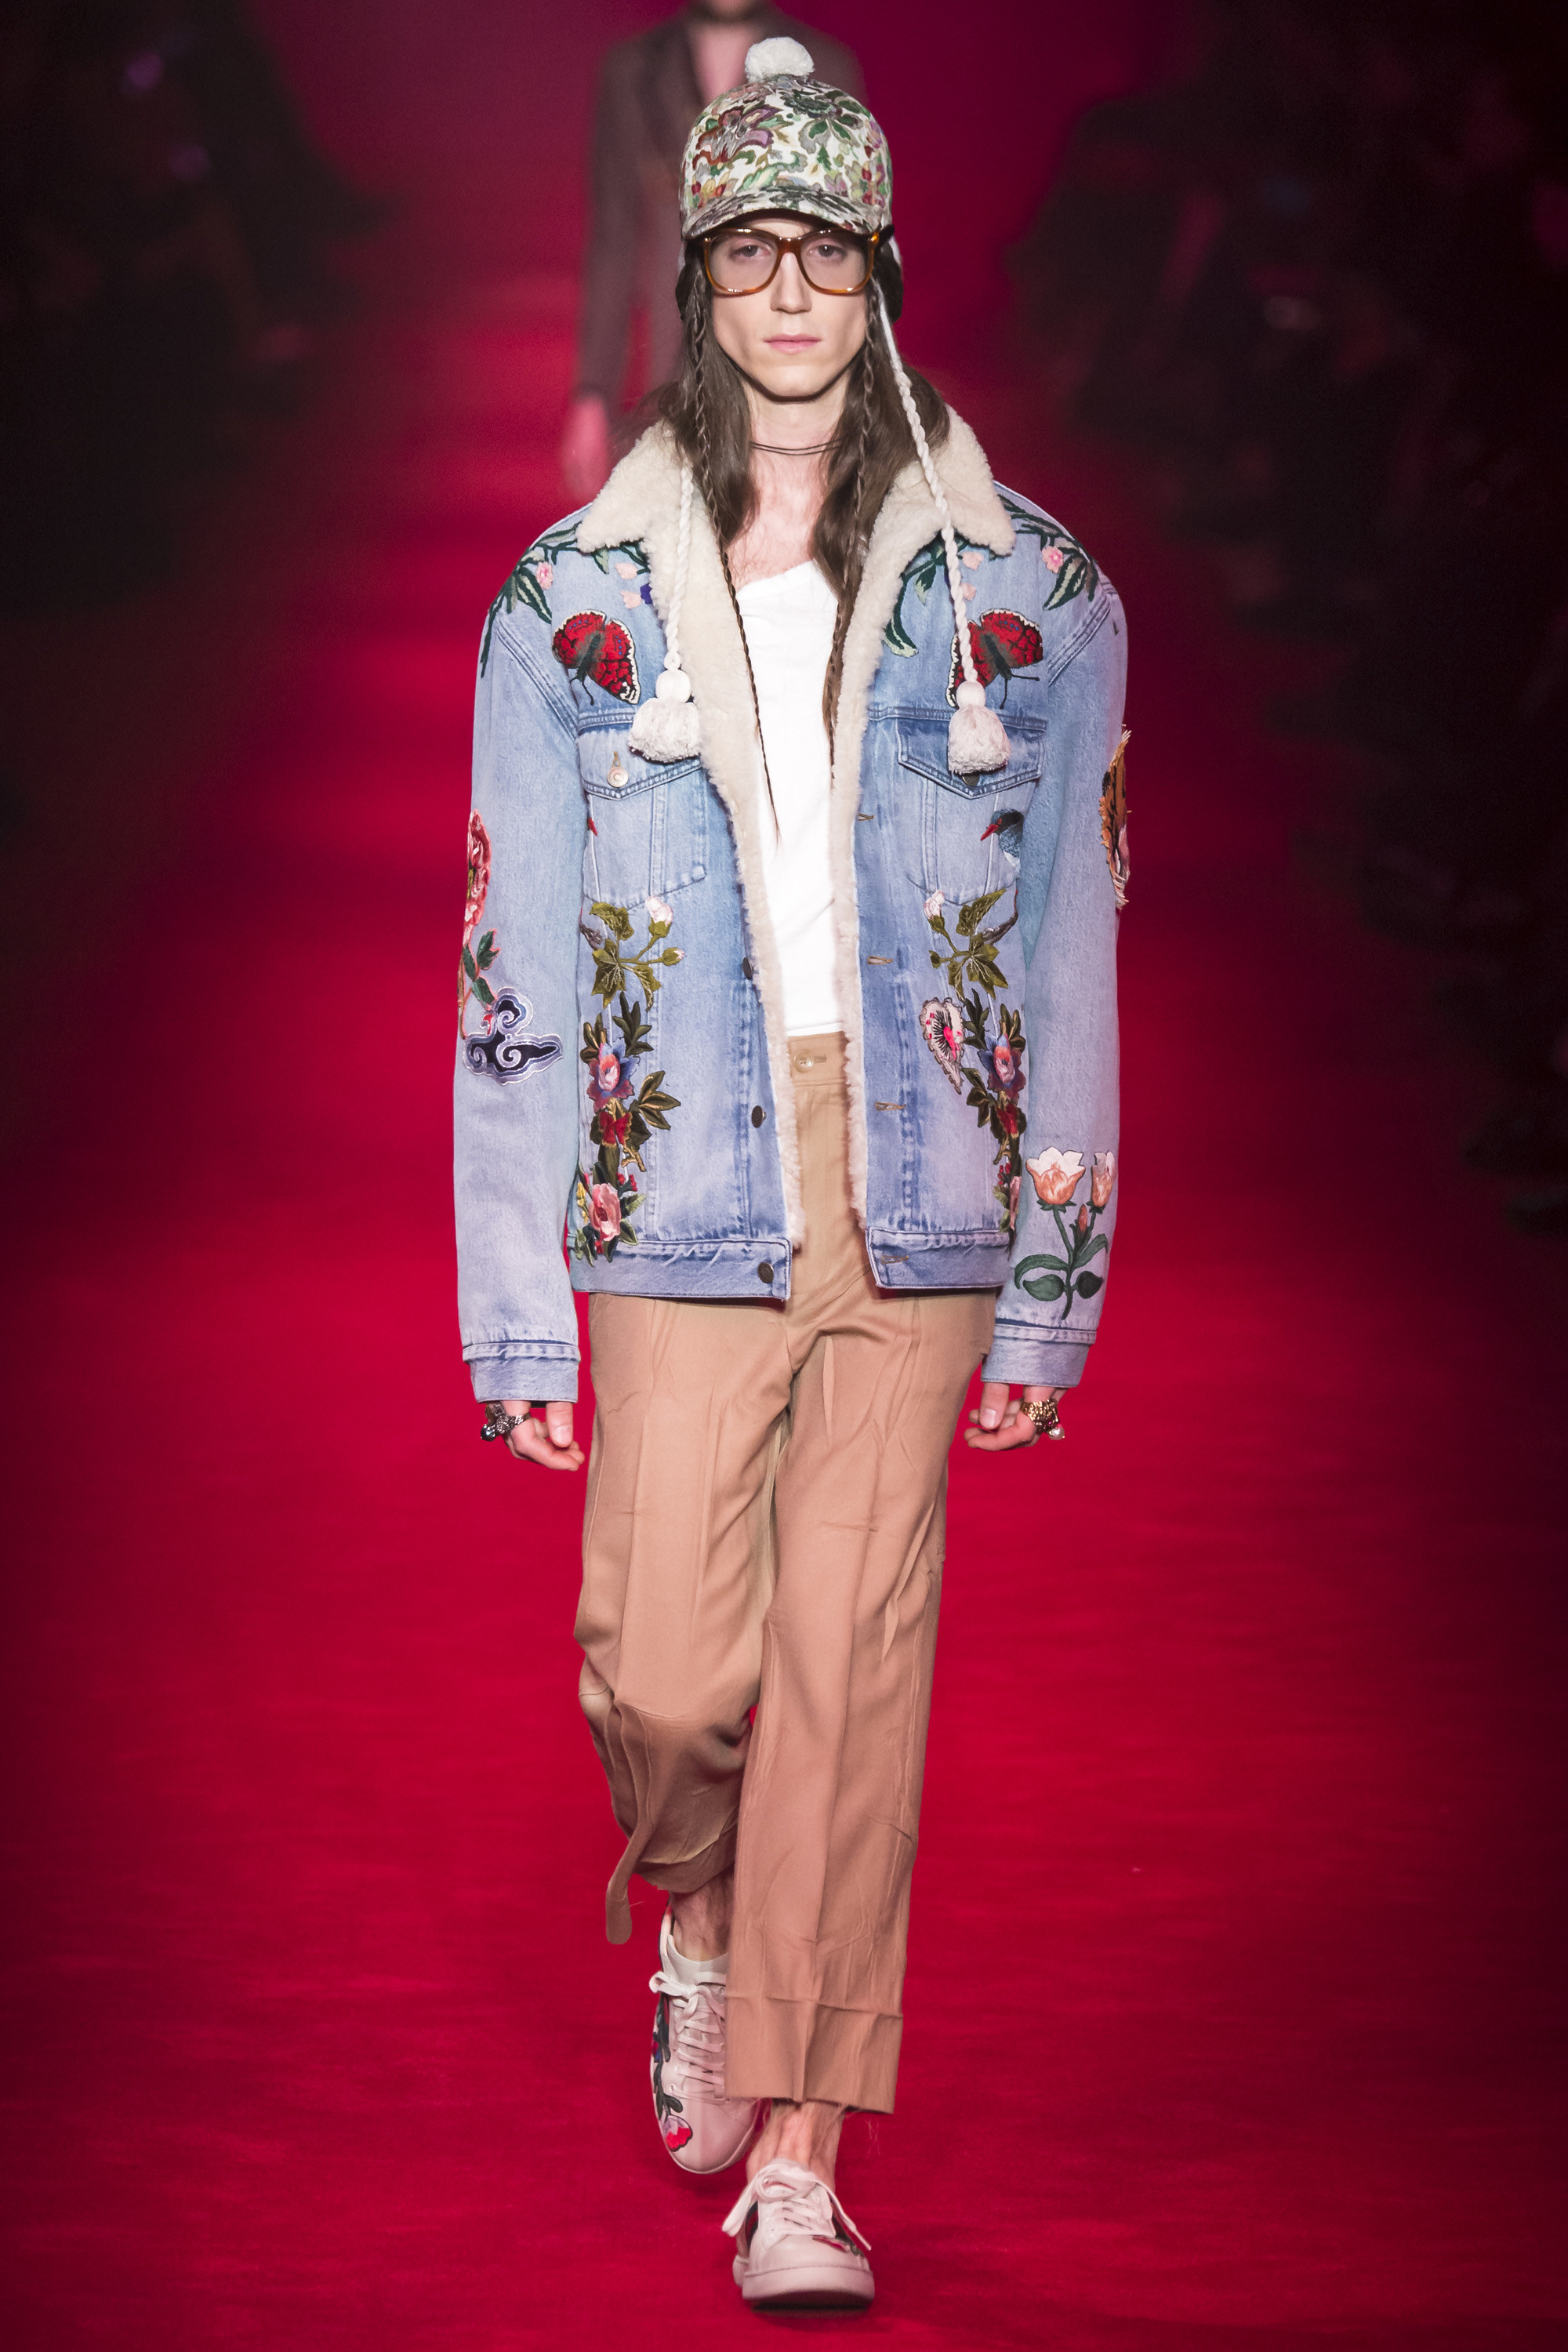 Gucci FALL 2016 MENSWEAR Milan Fashion Week